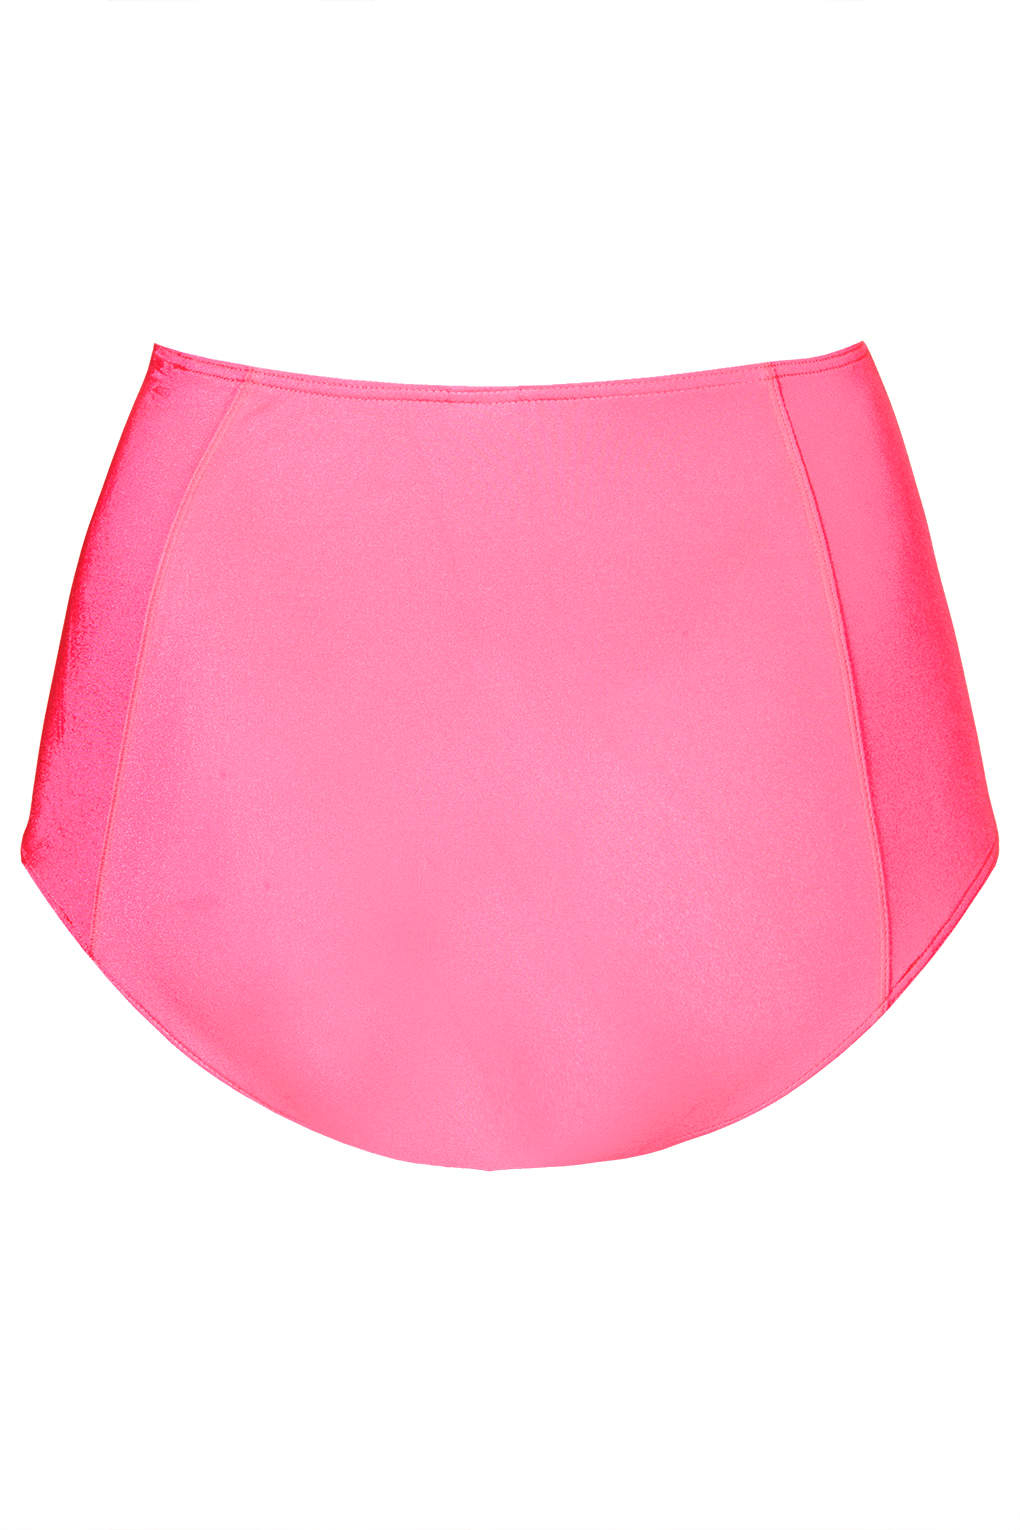 TOPSHOP Womens Pink High Waist Bikini Pants Bright Pink - Lyst